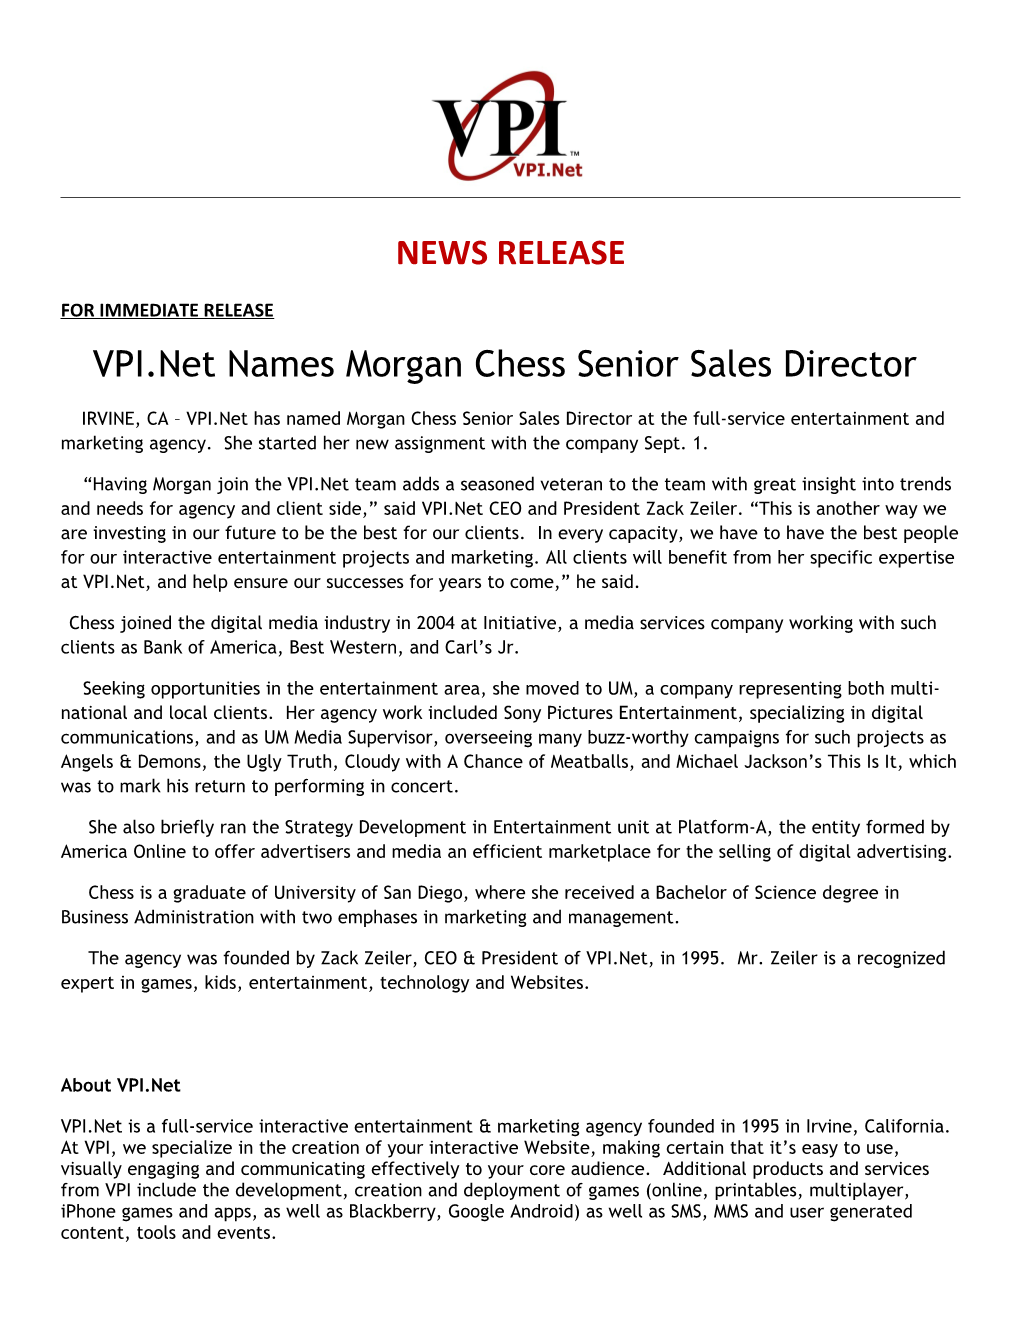 VPI.Net Names Morgan Chess Senior Sales Director